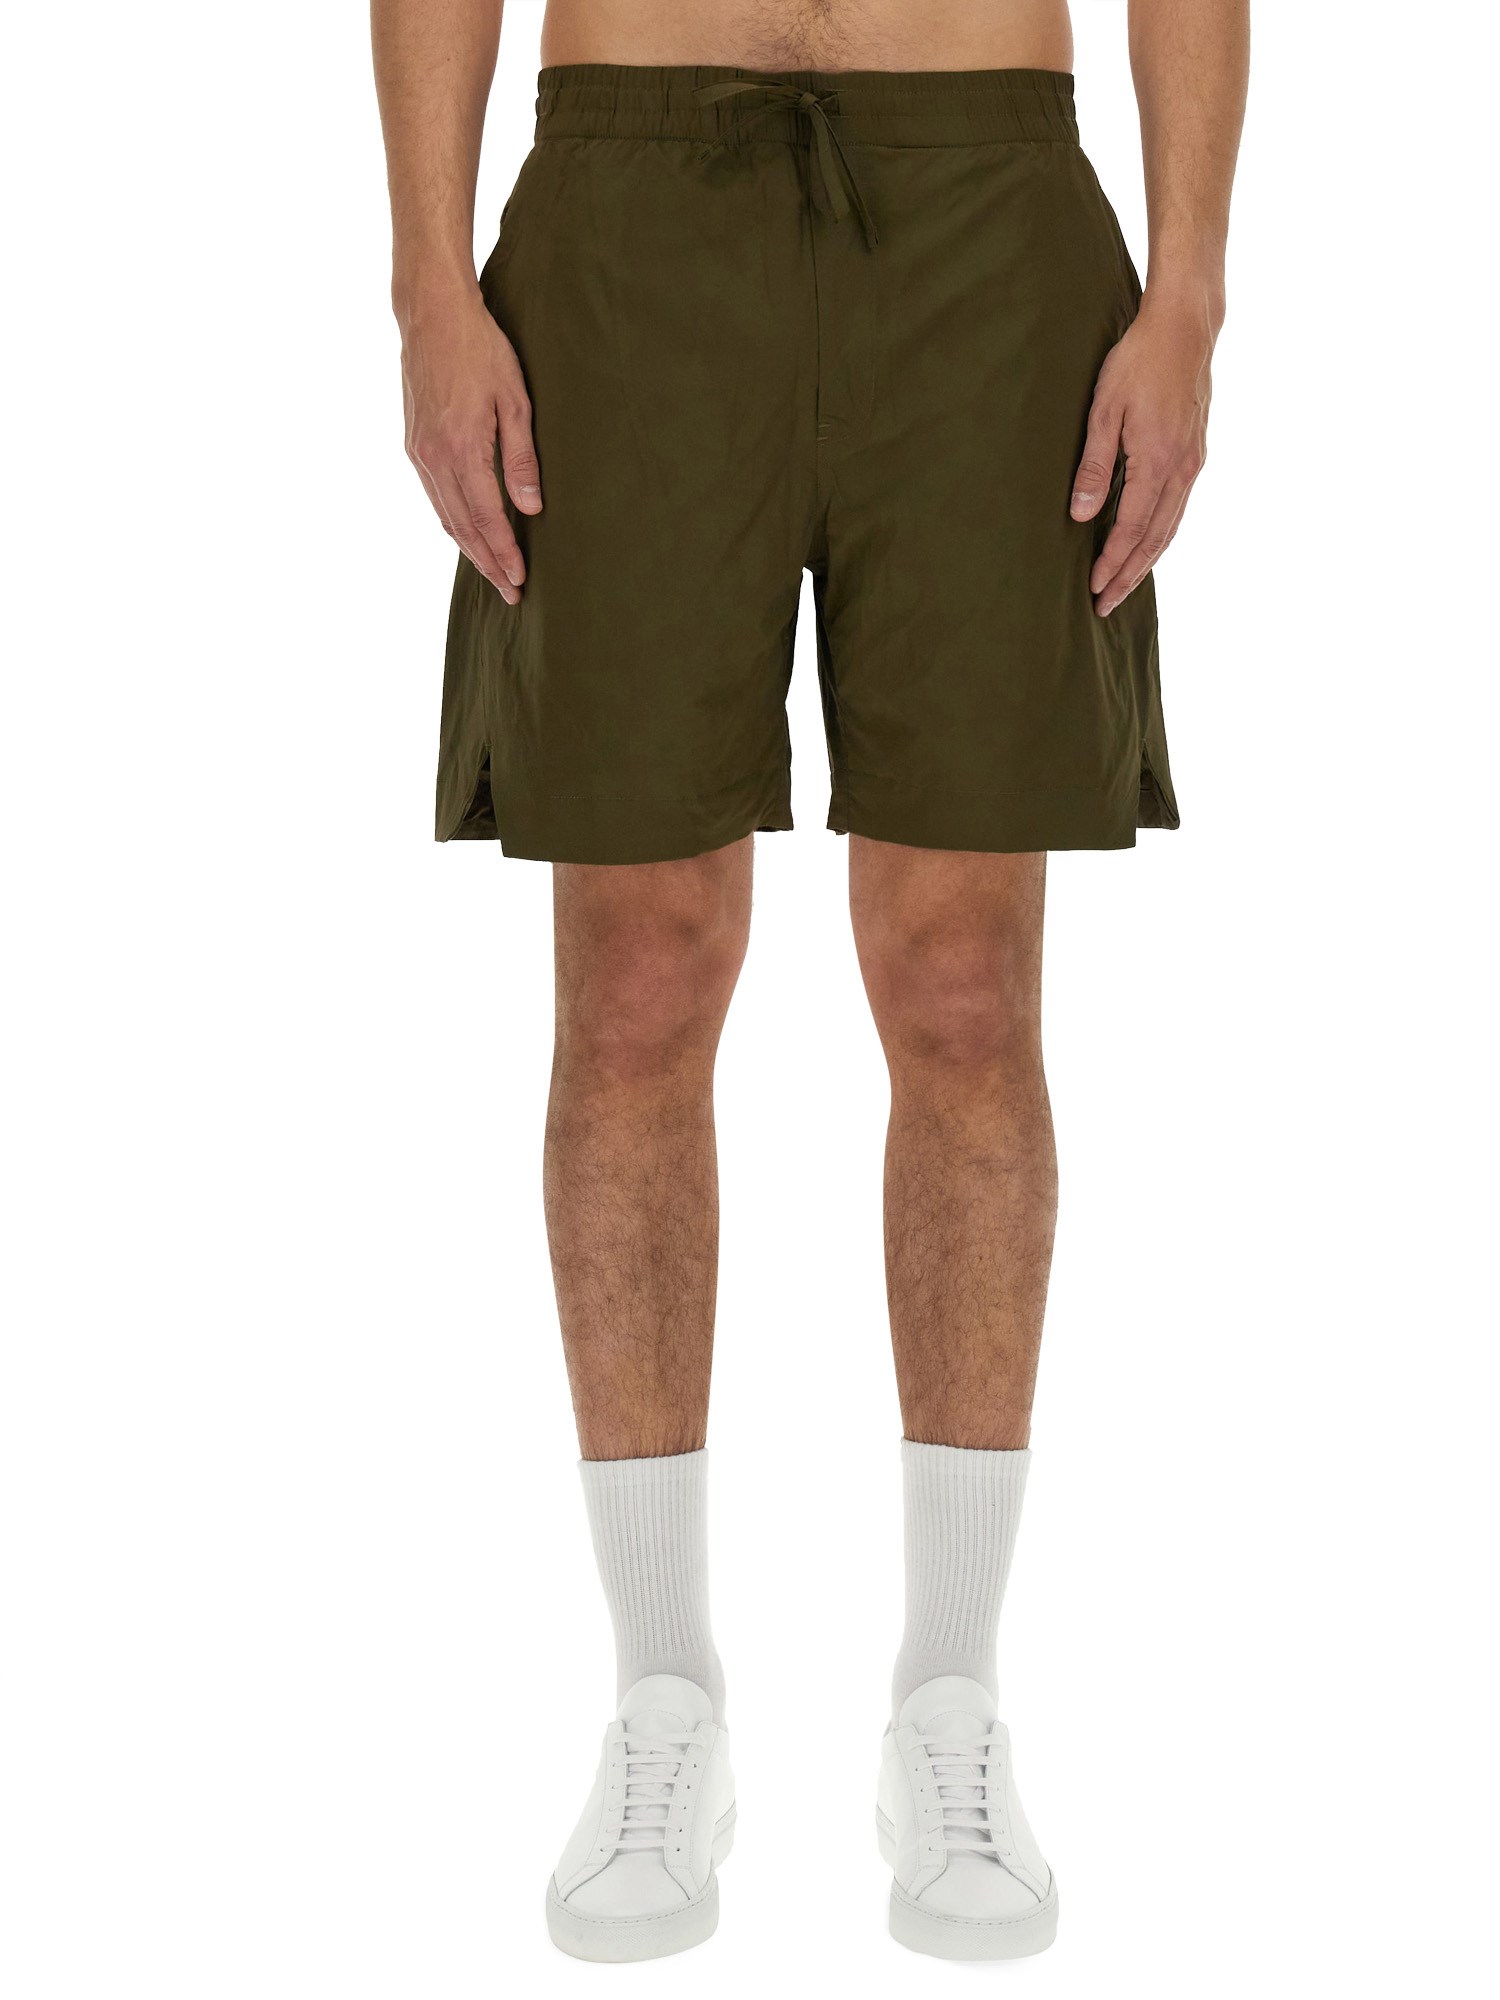 Canada Goose canada goose nylon bermuda shorts